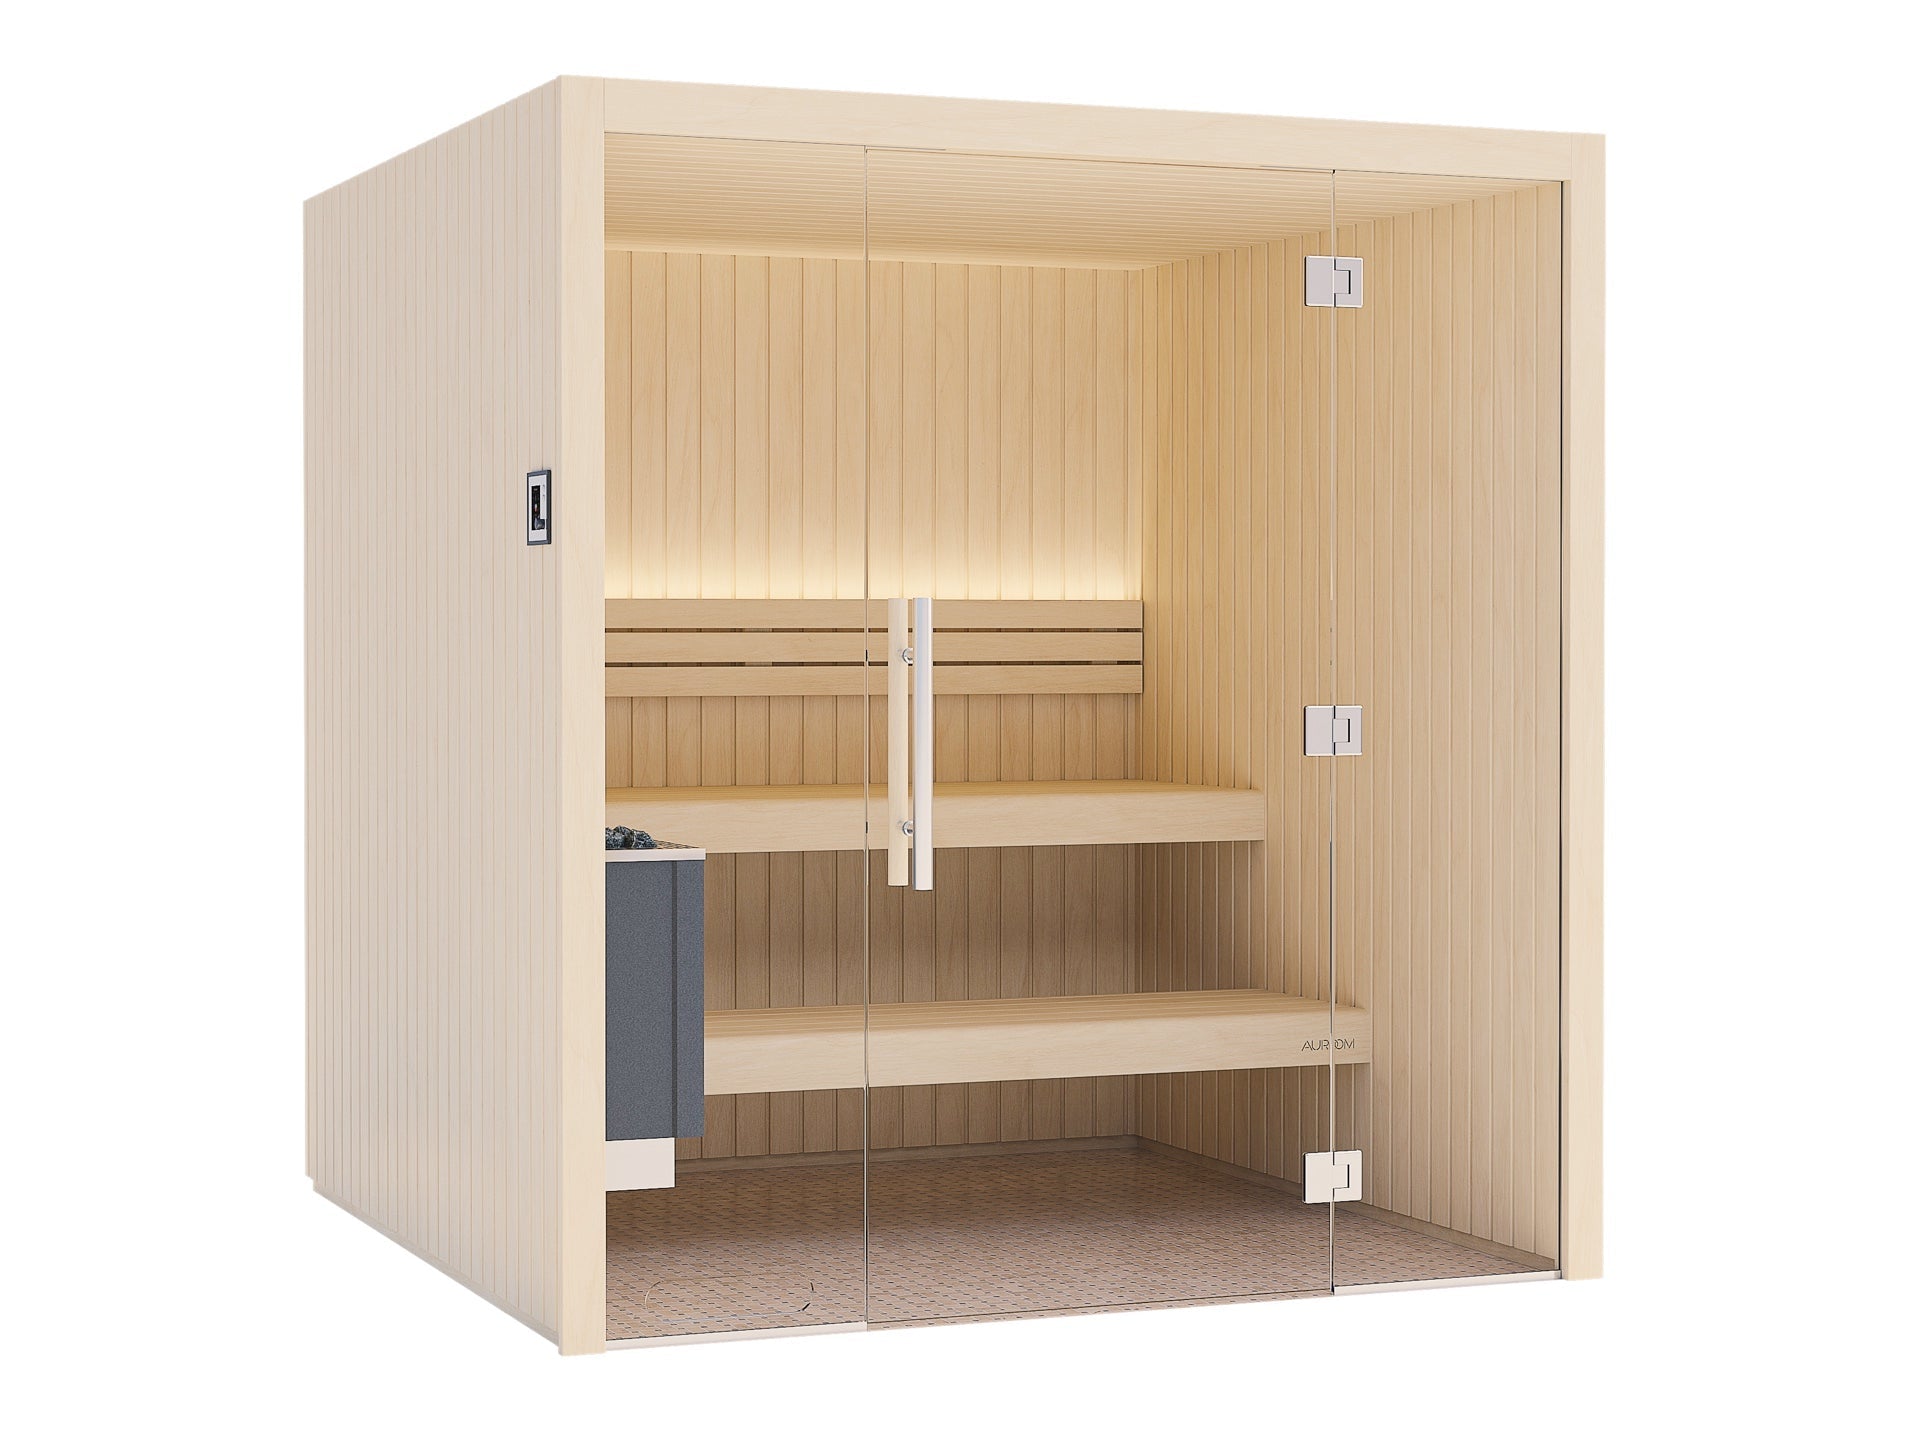 Auroom | Emma Glass 4-6 Person Indoor Traditional Sauna